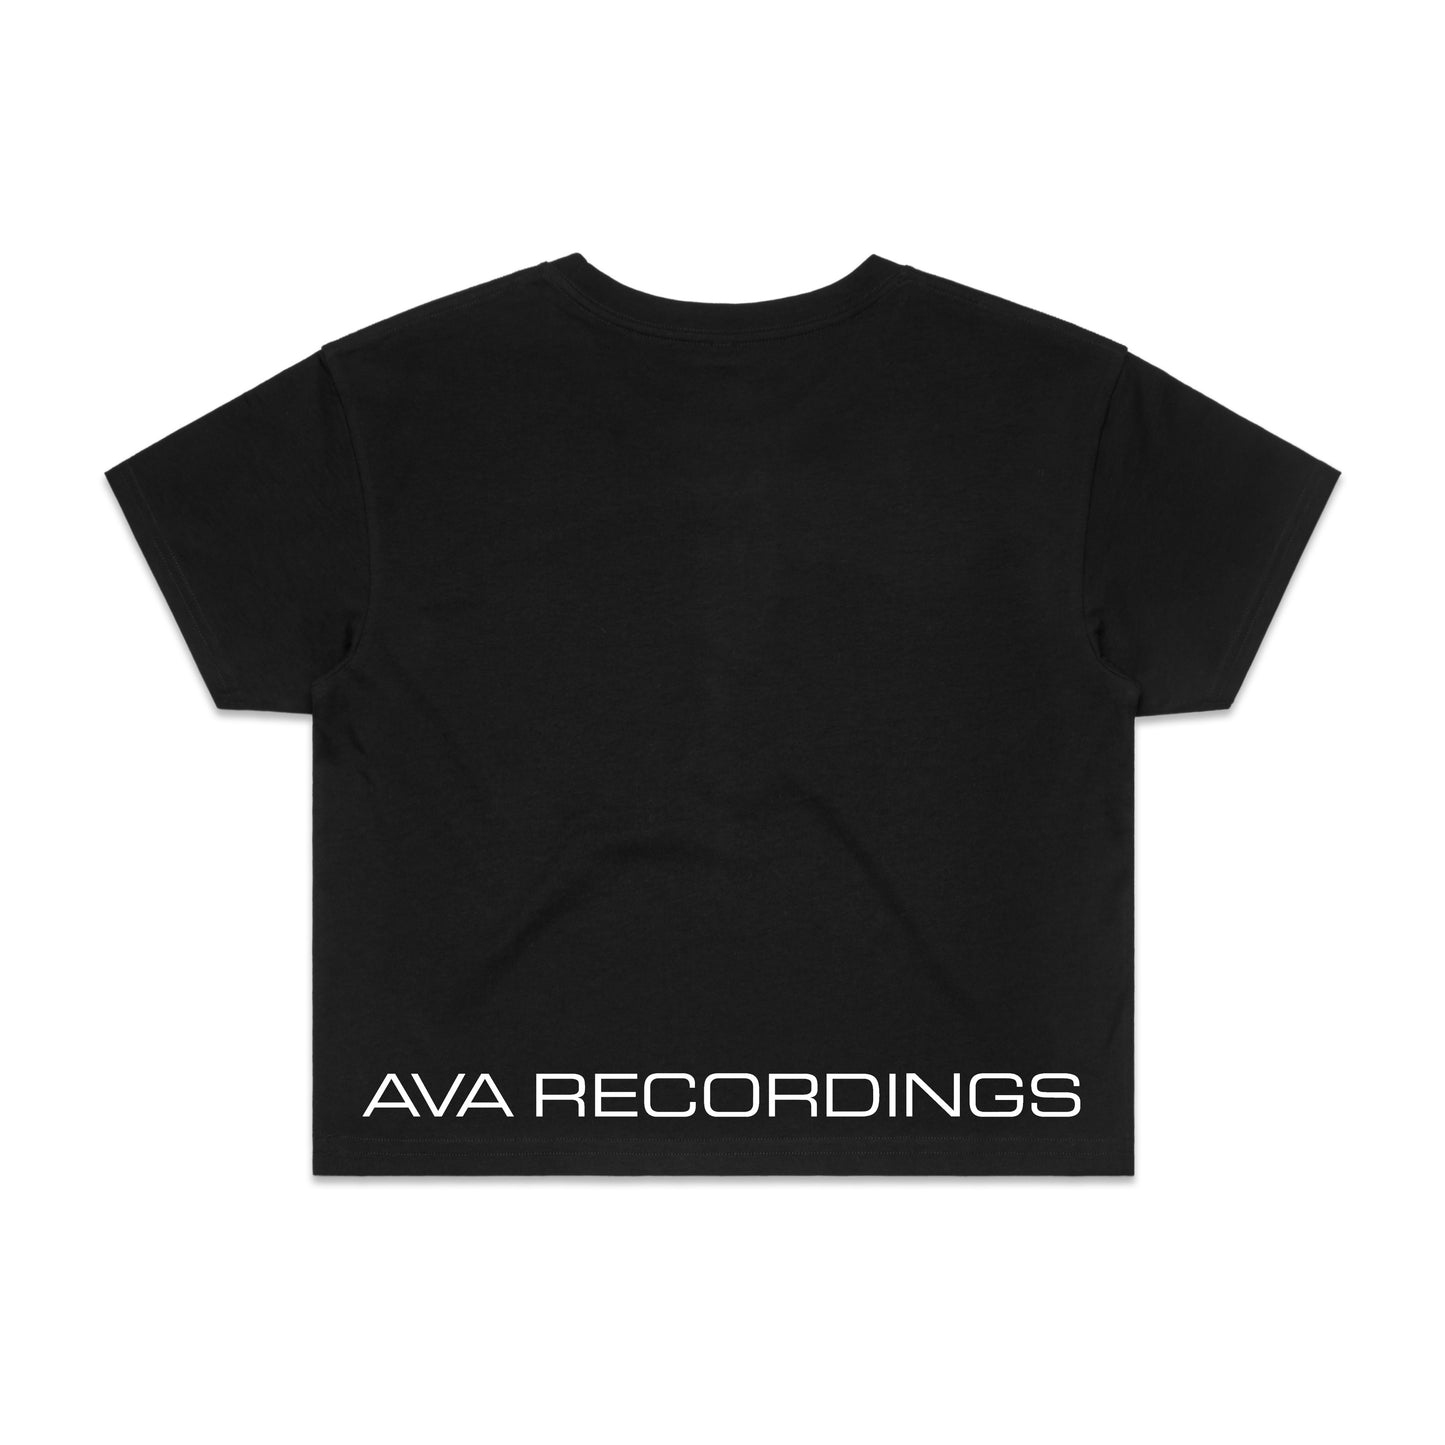 AVA RECORDINGS Crop Tee